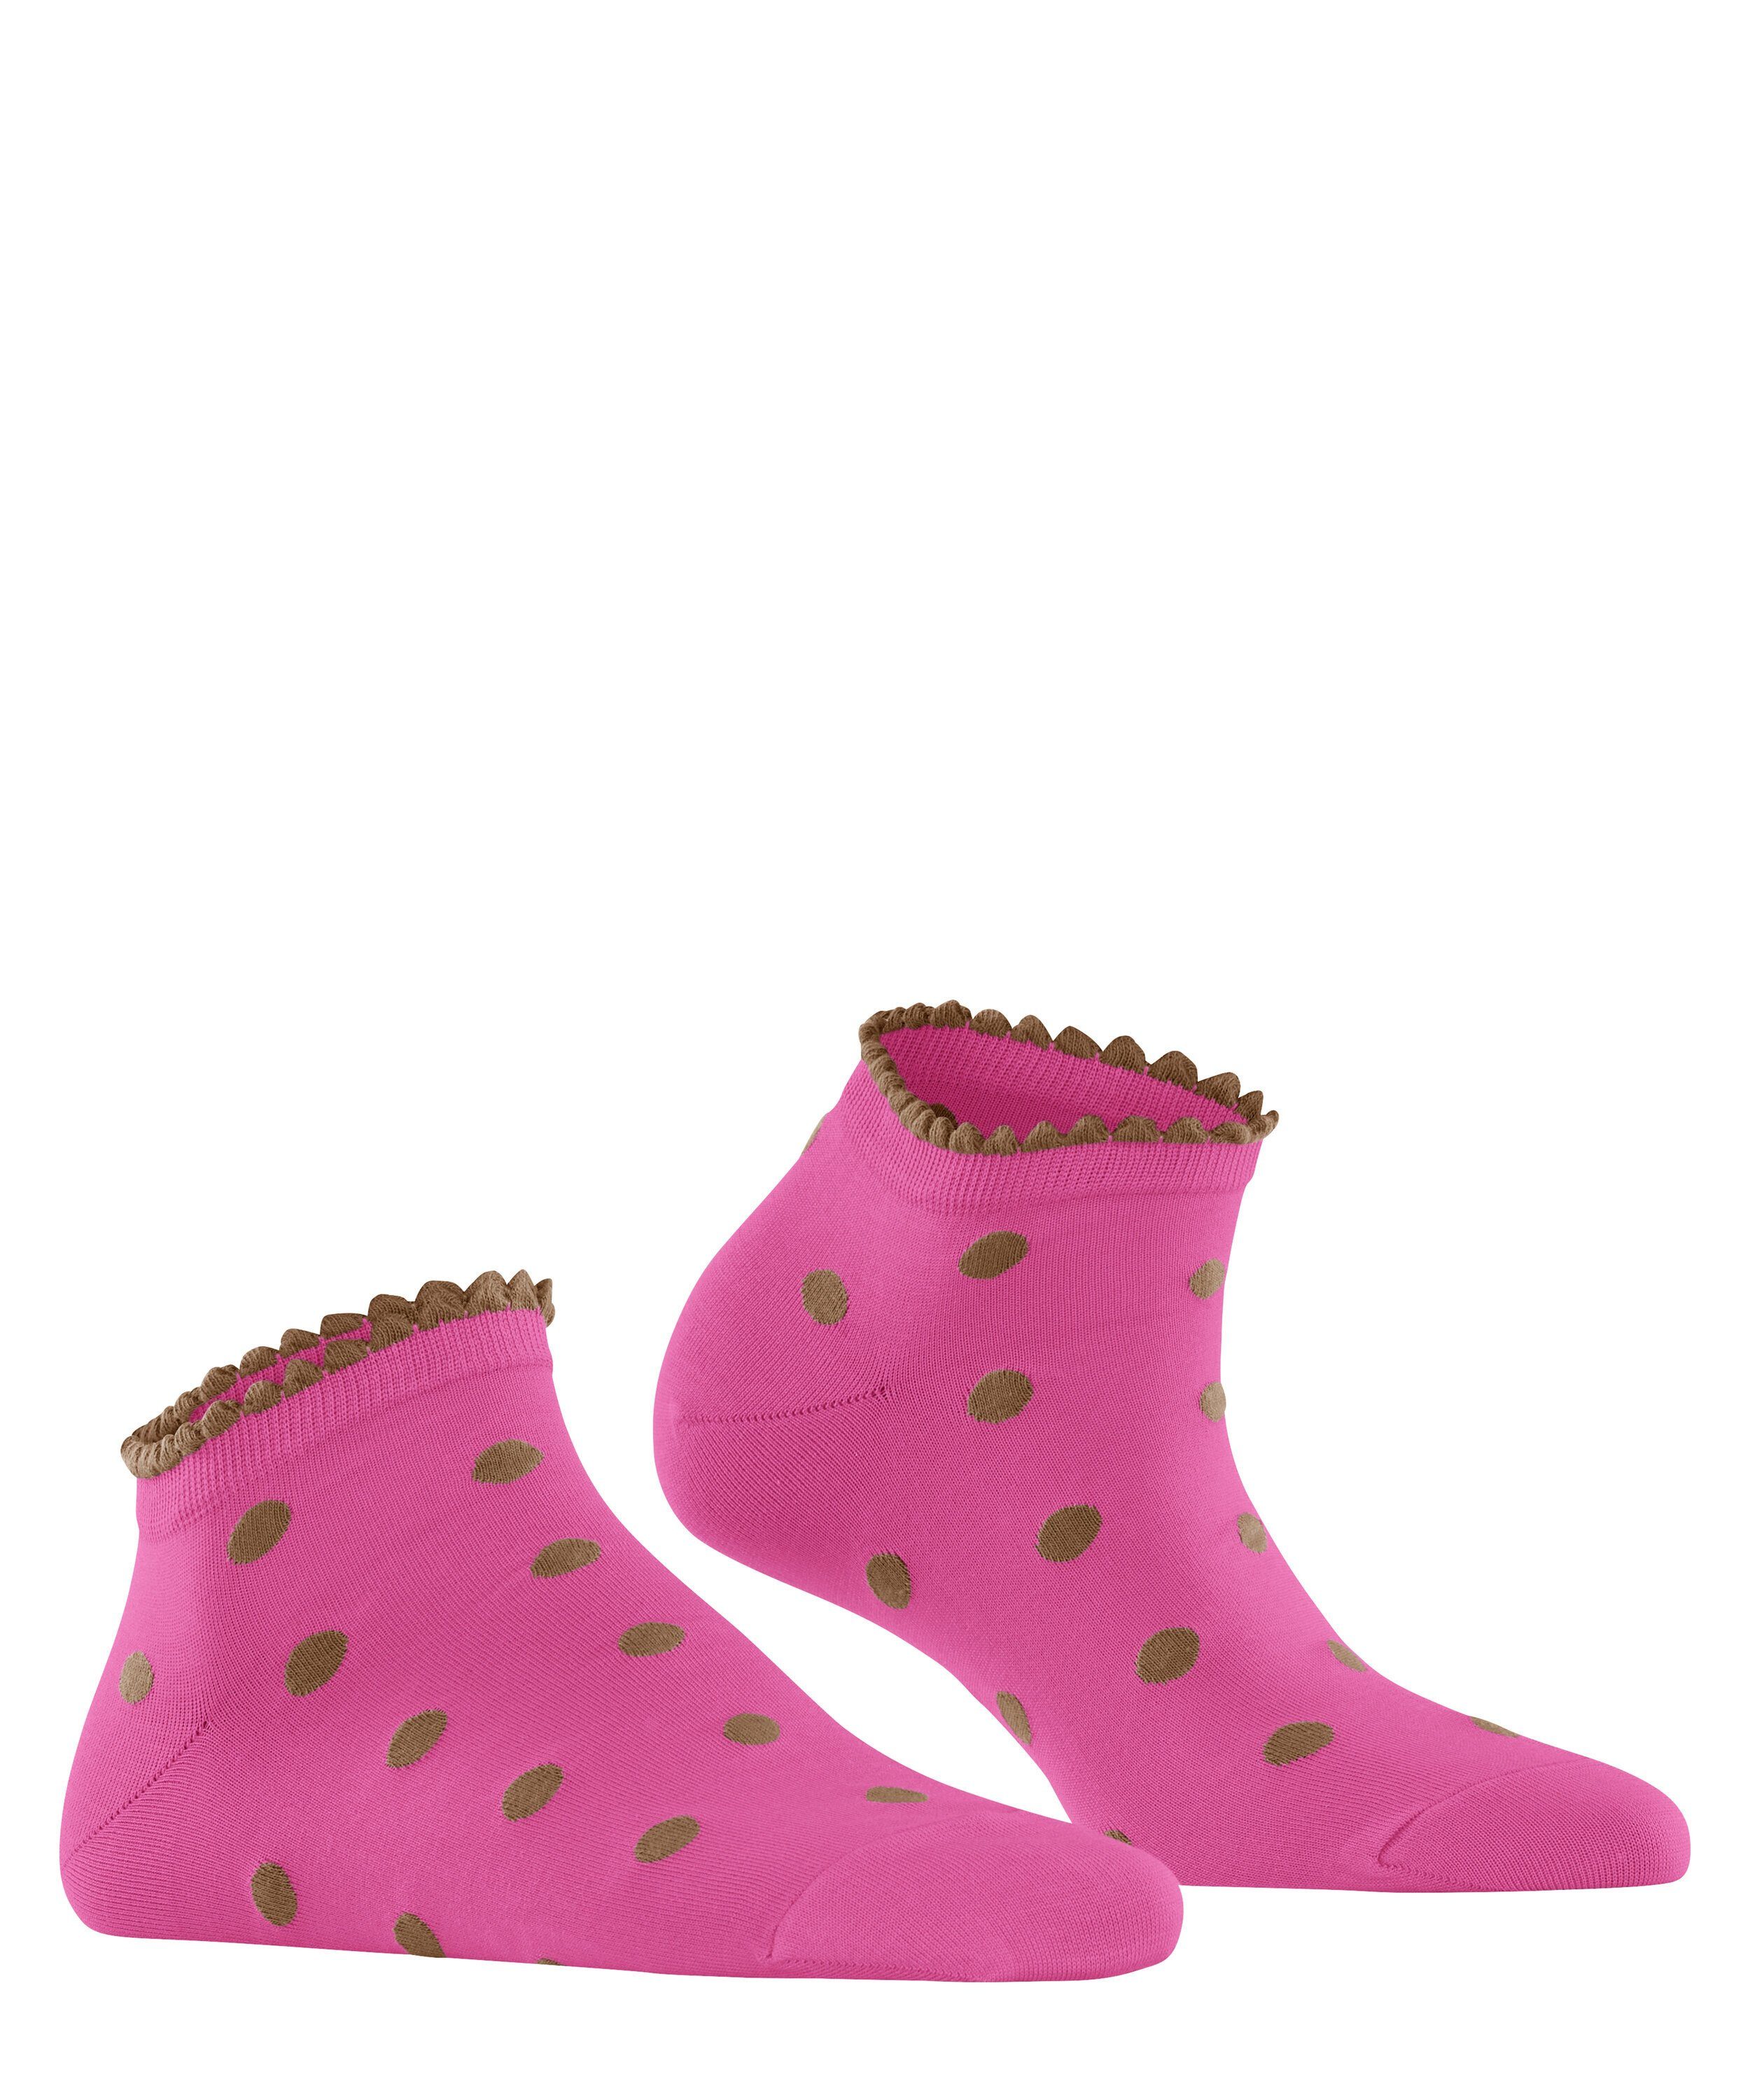 FALKE Sneakersocken Lady Bug pink (8676) Punktdesign hot mit (1-Paar)